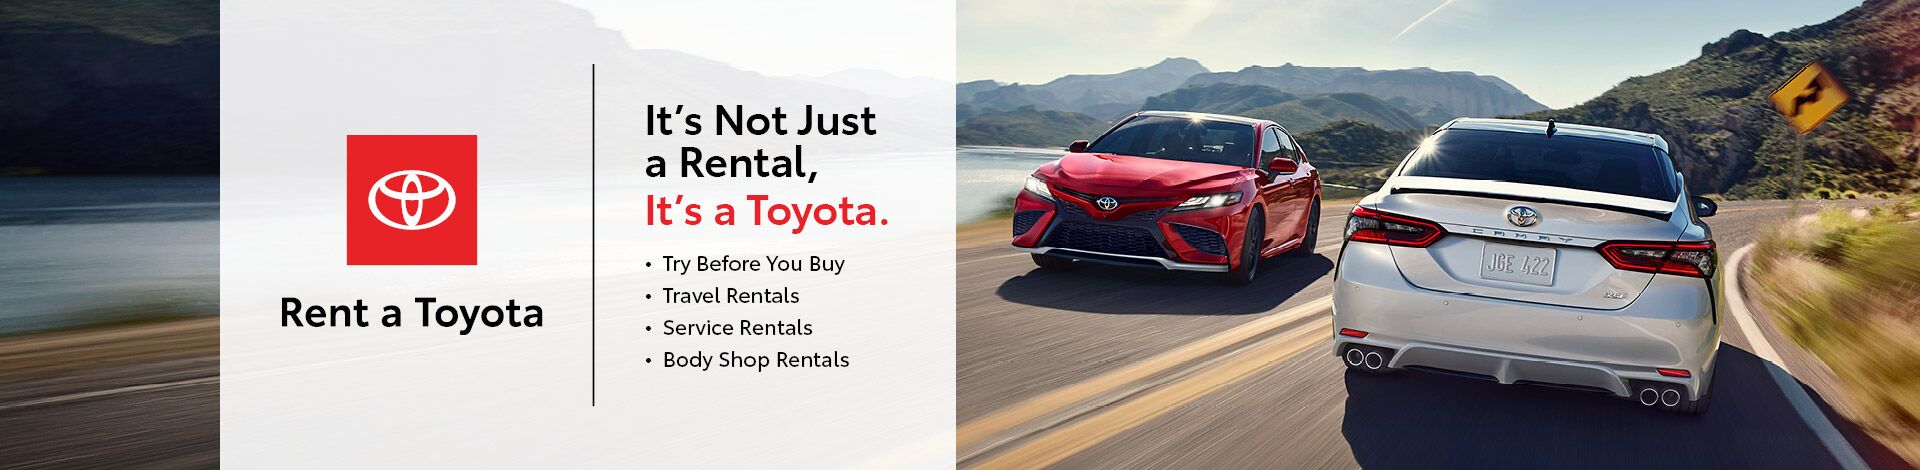 Rent a Toyota